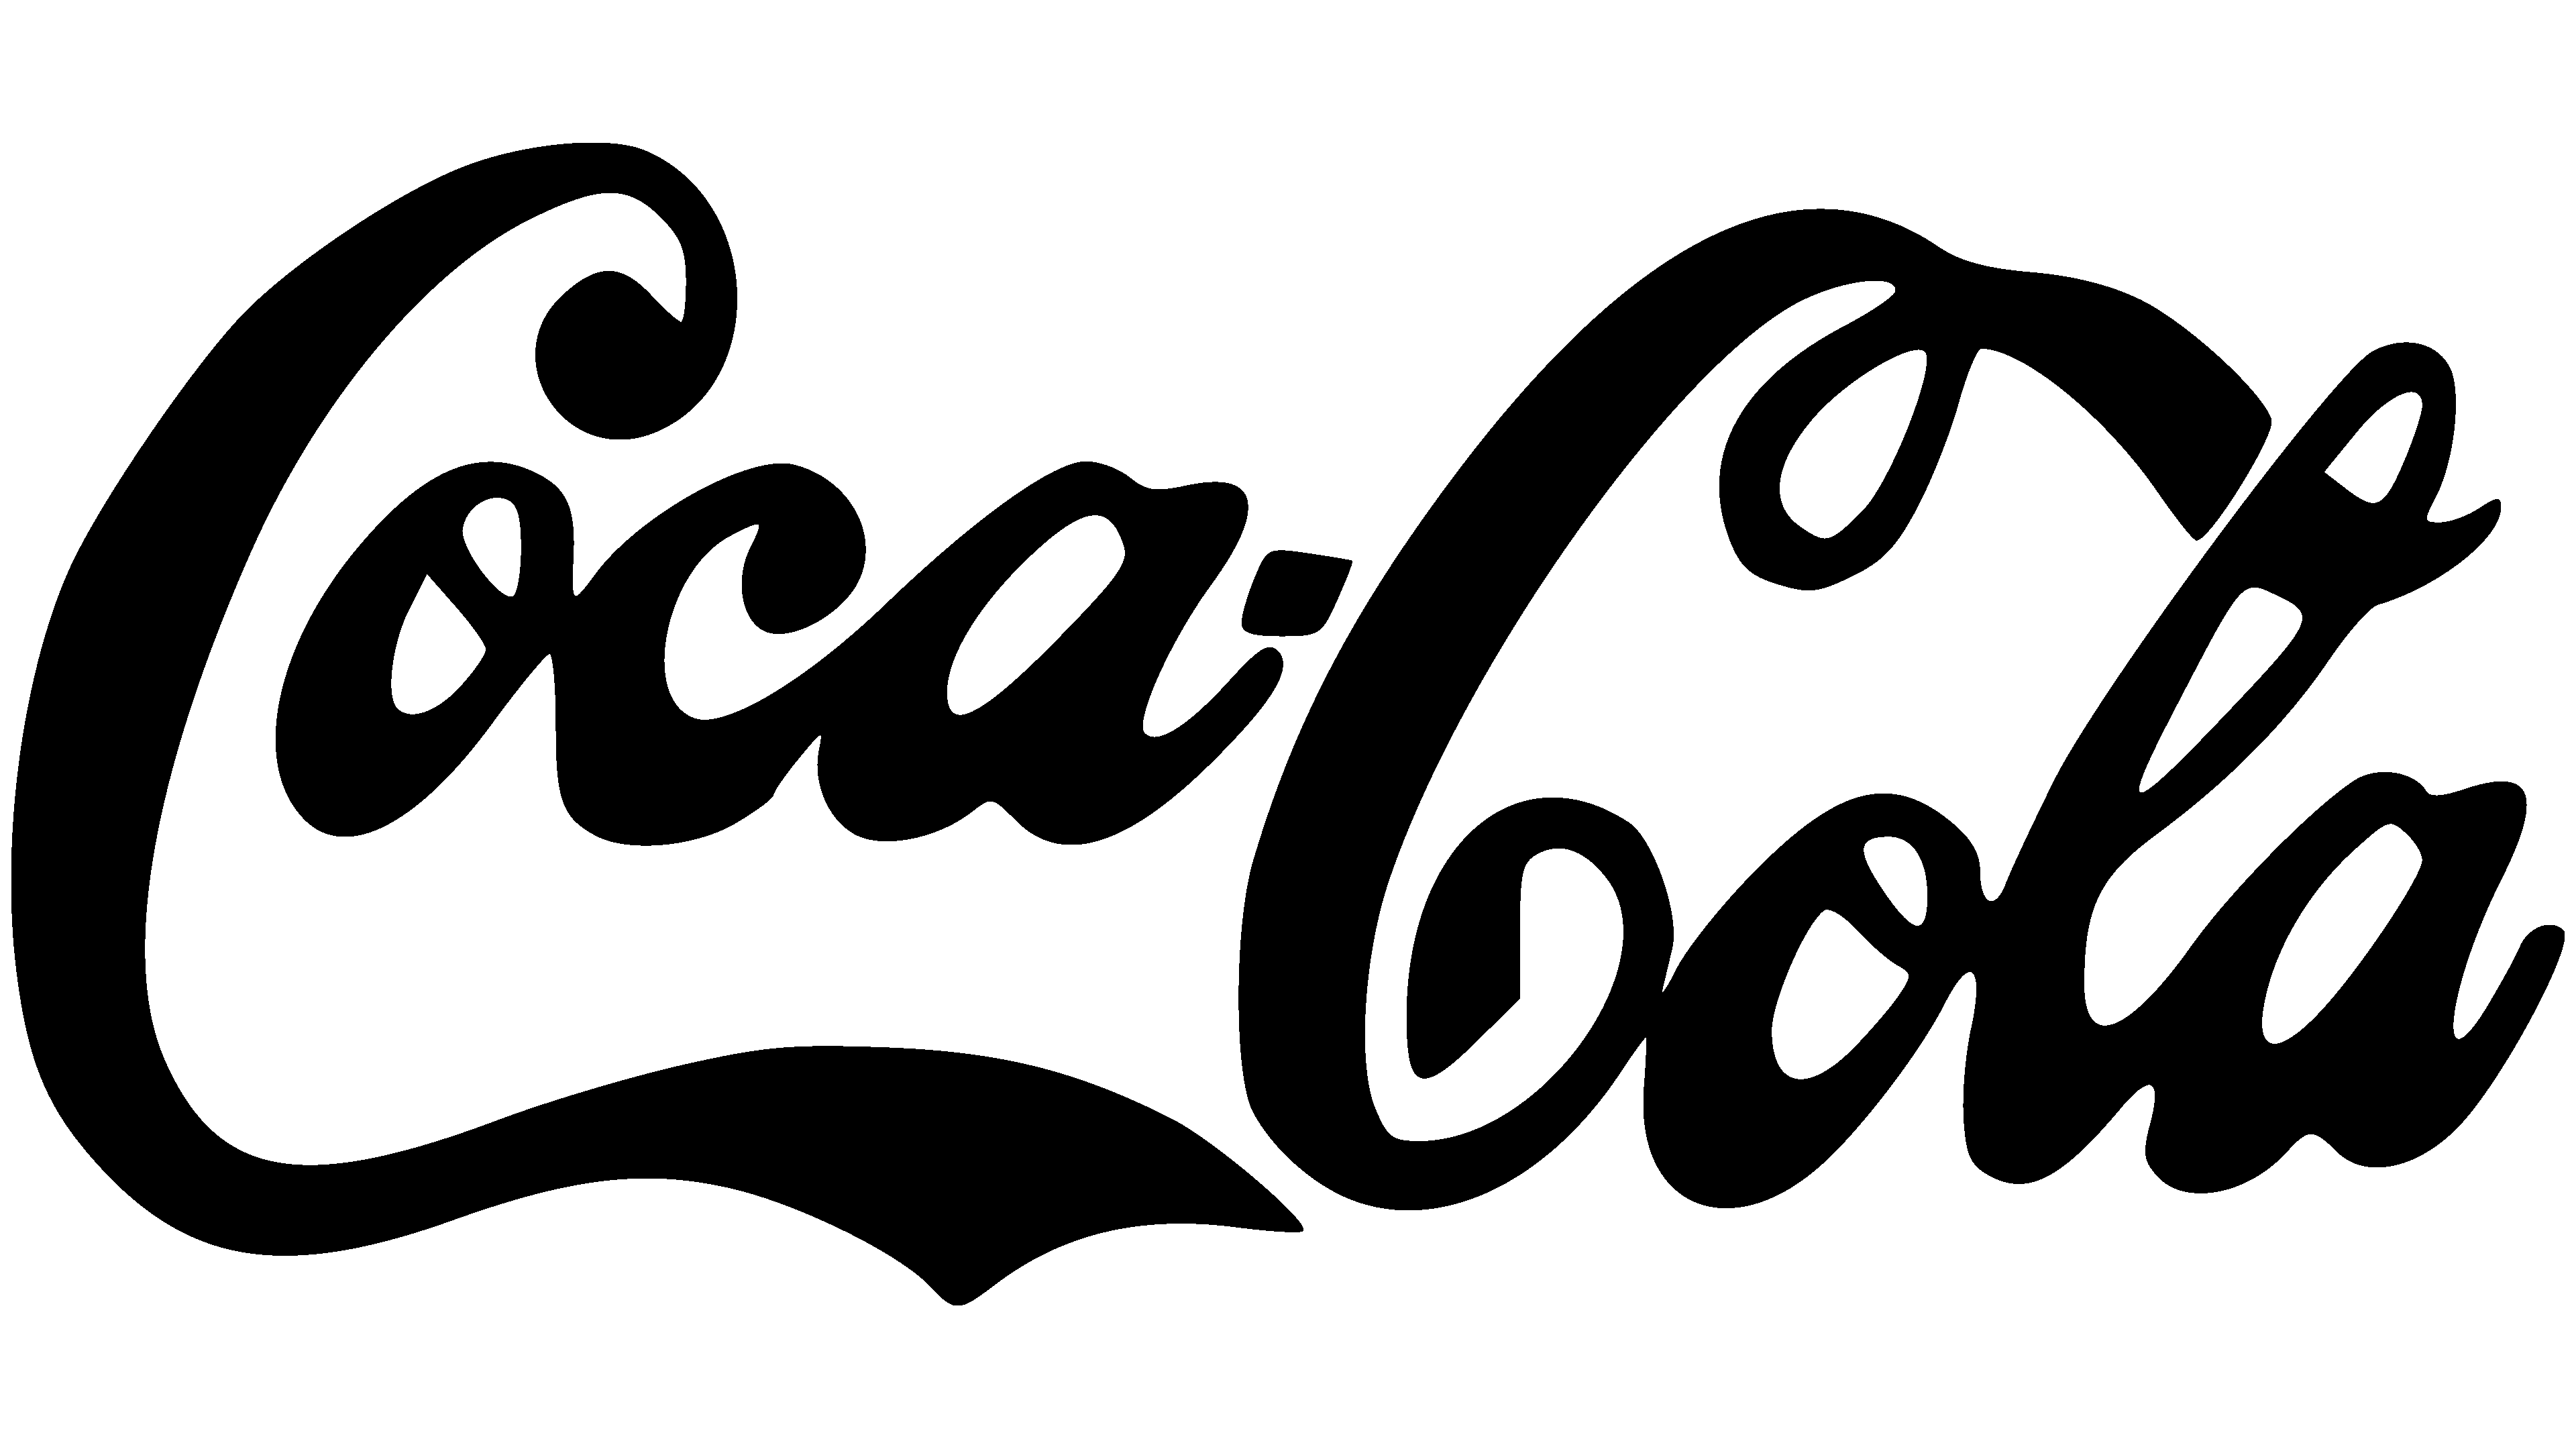 coca cola logos